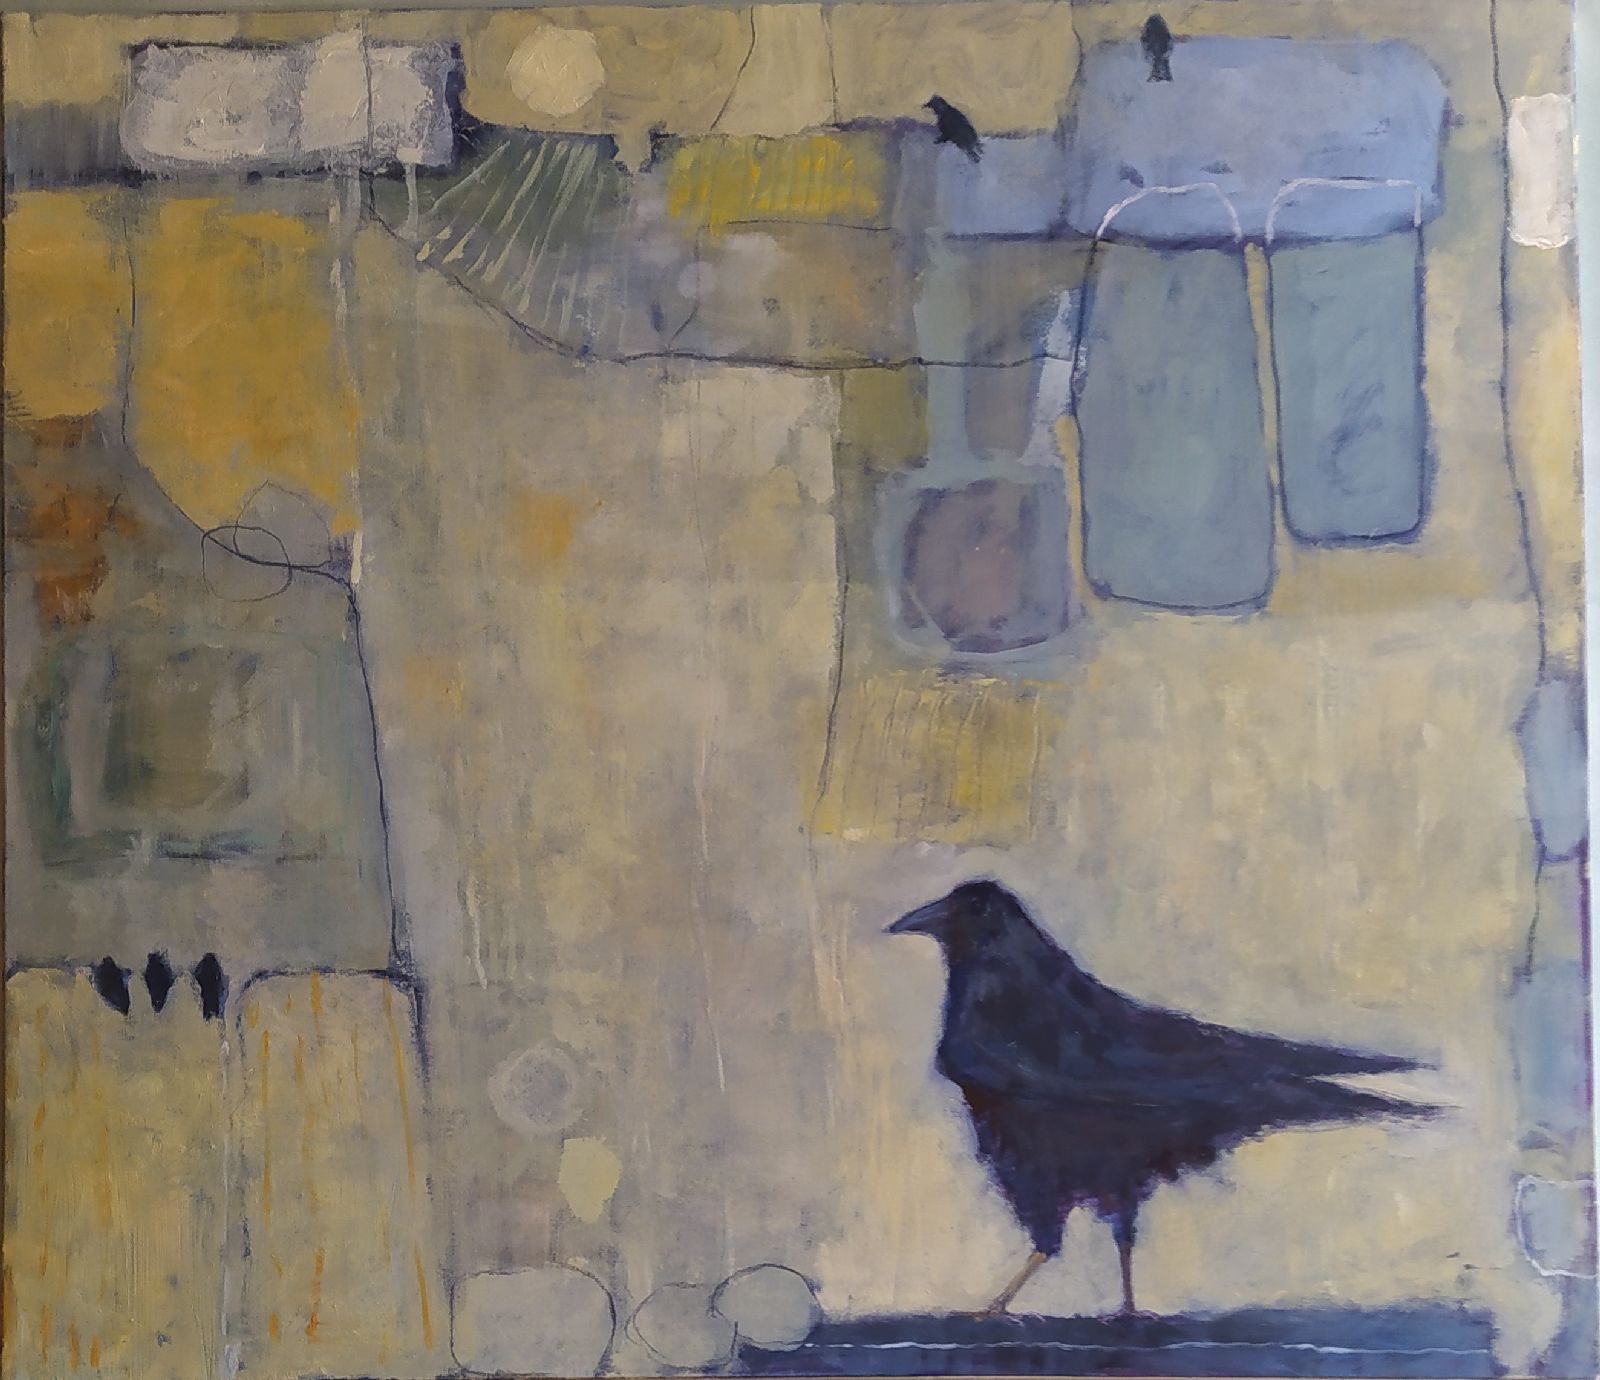 Crows in a wheat field  by Giacomo  Mazzari